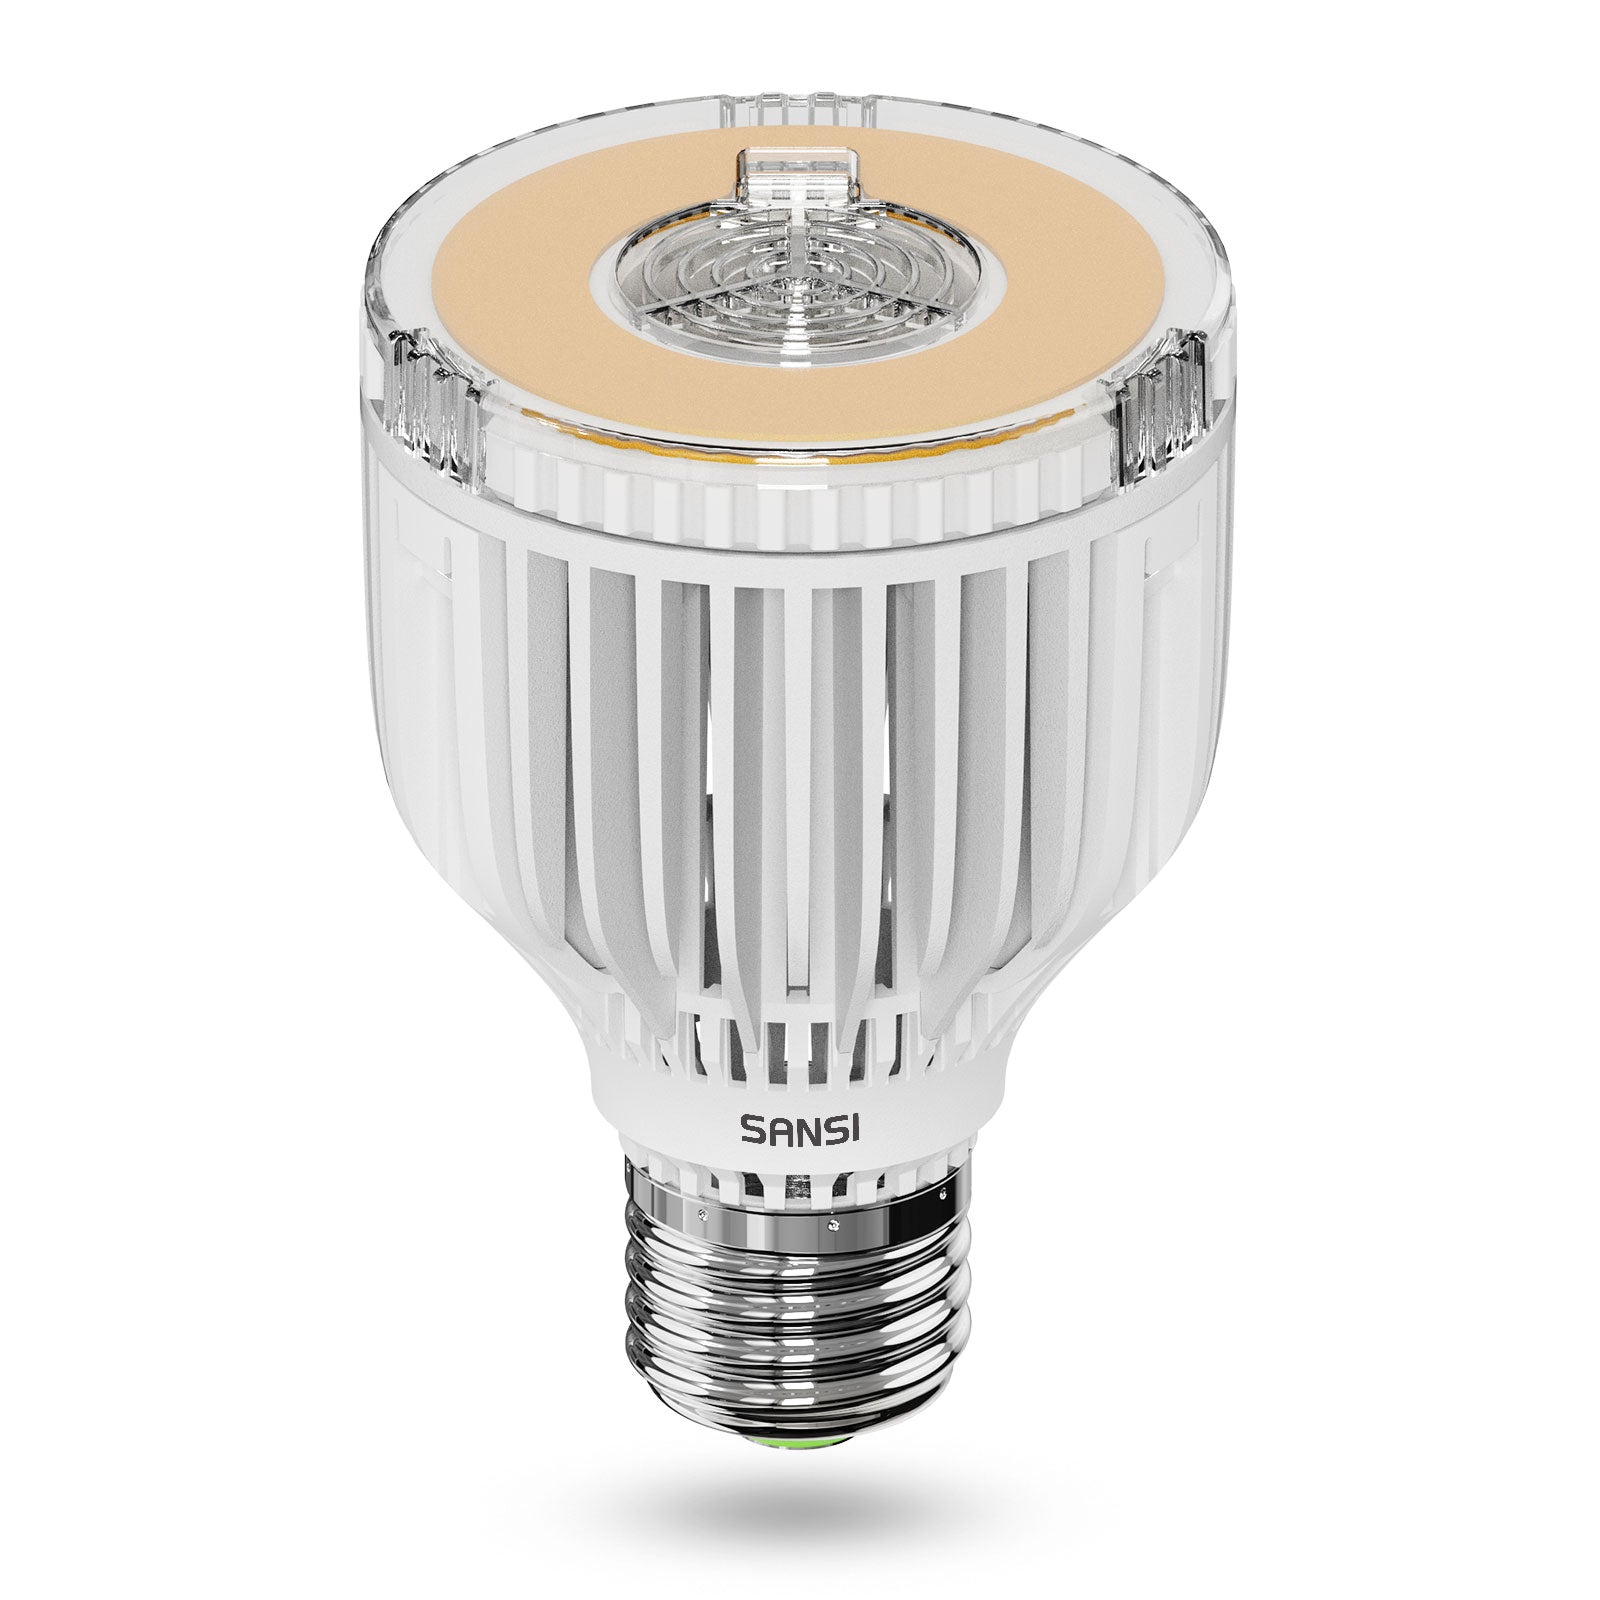 A19 40W led light bulb, 3000K warm white